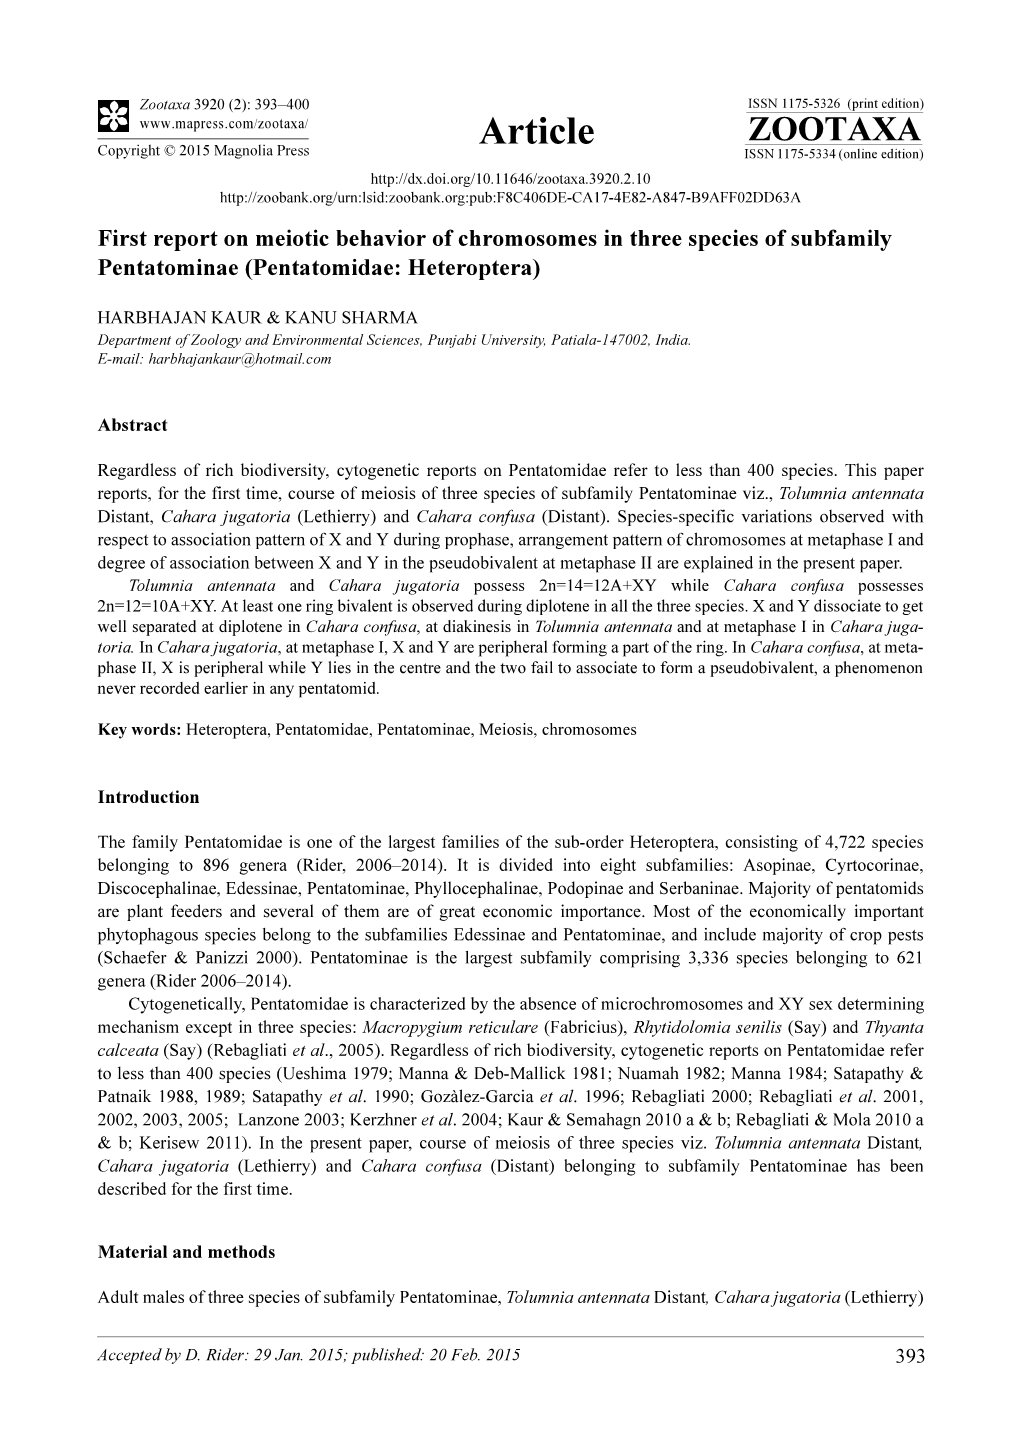 First Report on Meiotic Behavior of Chromosomes in Three Species of Subfamily Pentatominae (Pentatomidae: Heteroptera)